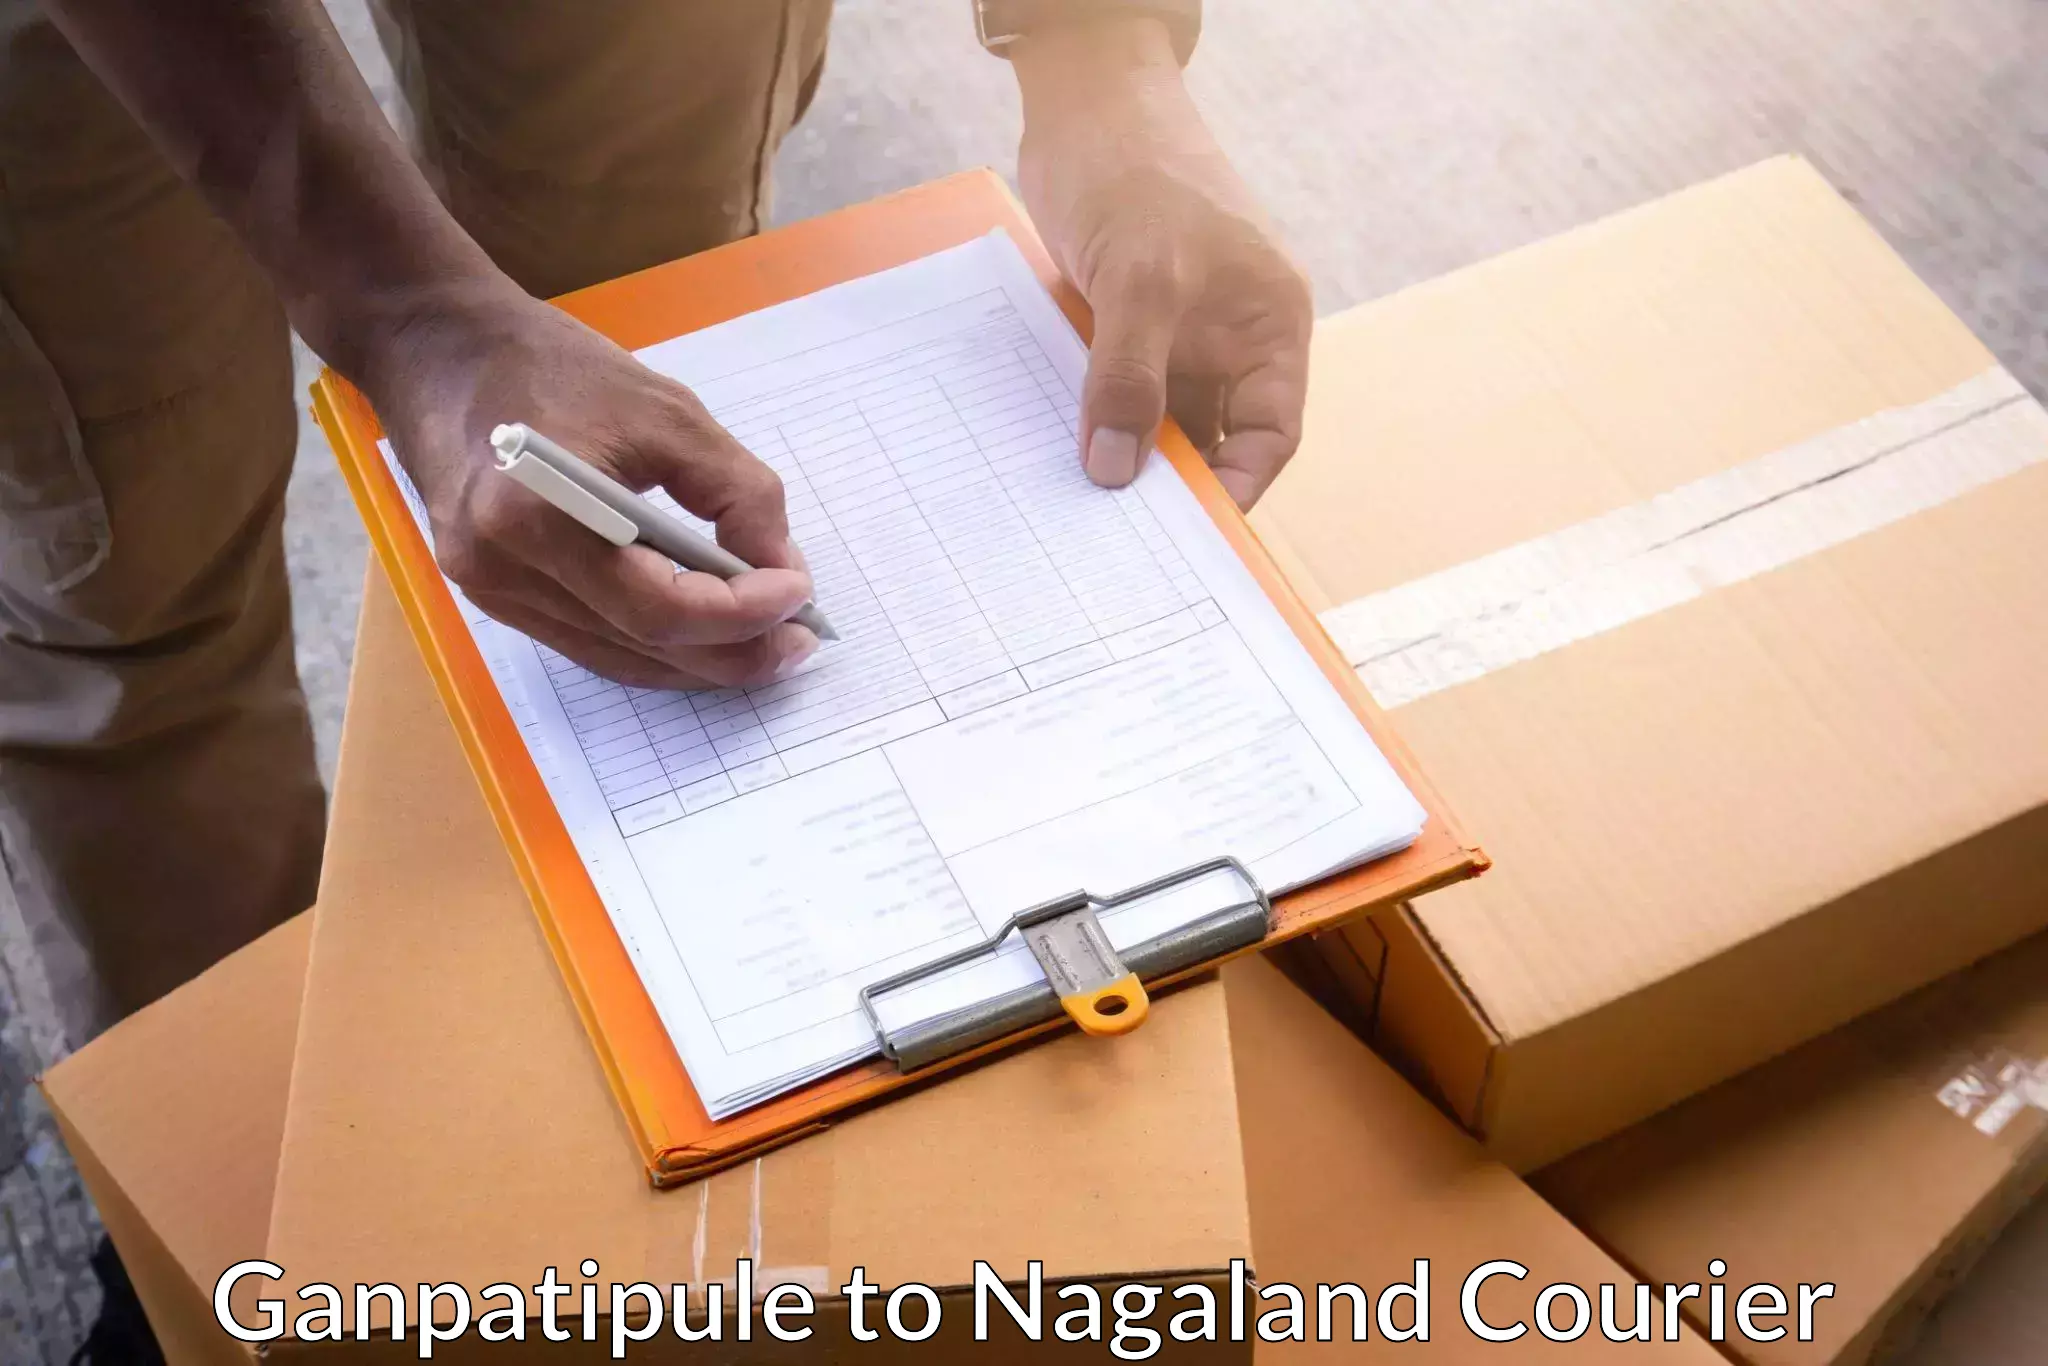 Courier service comparison in Ganpatipule to Dimapur